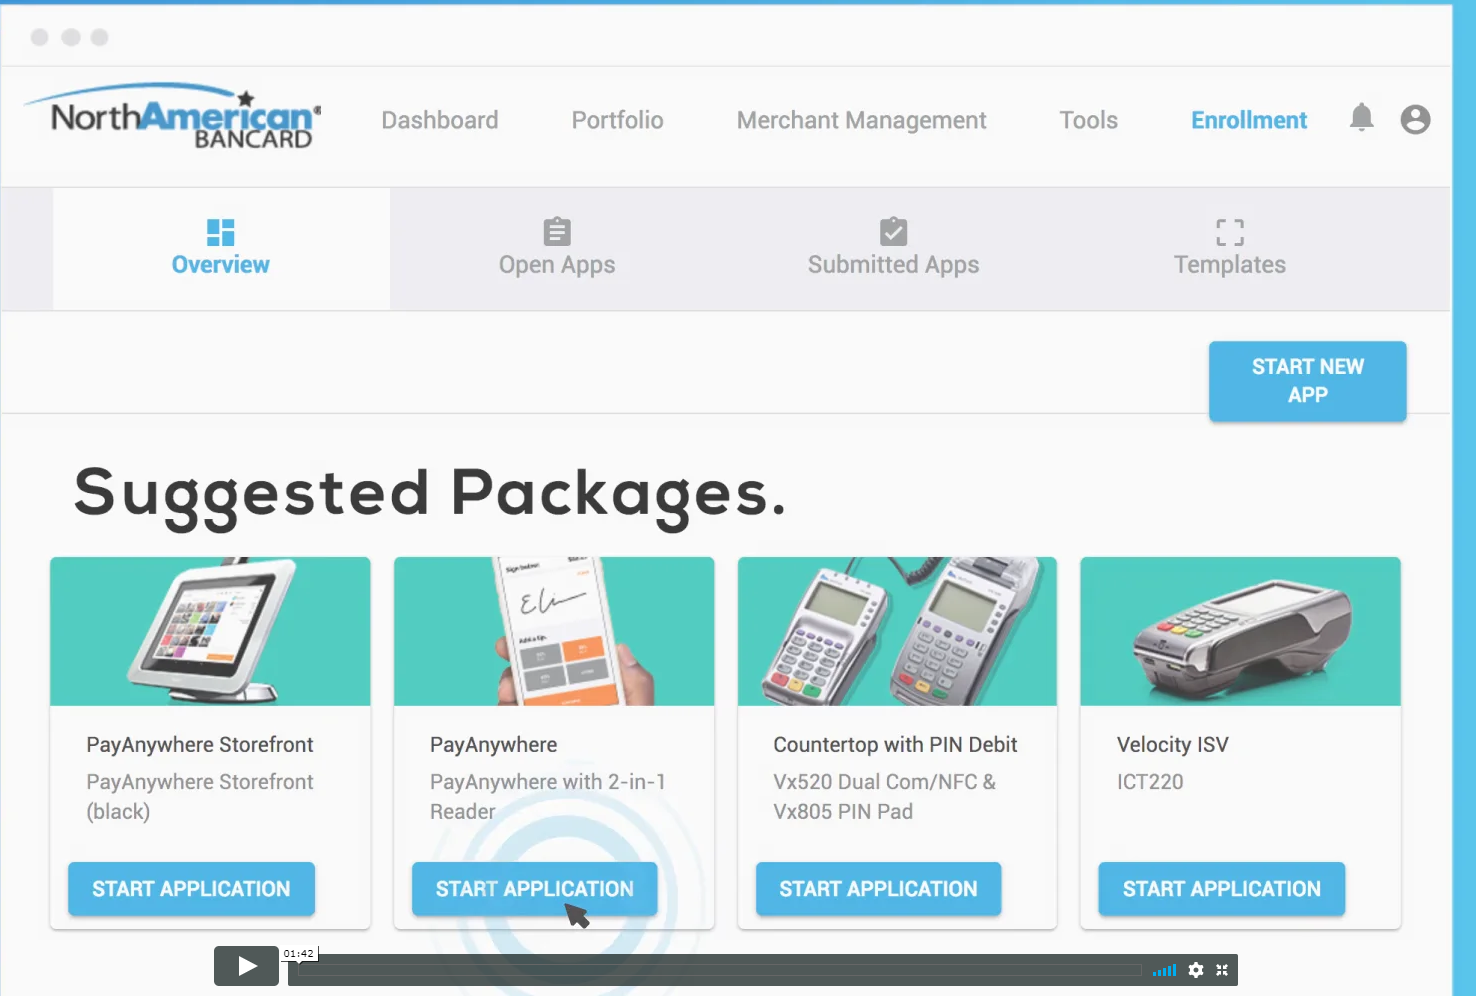 Sales Partner Portal Introduction